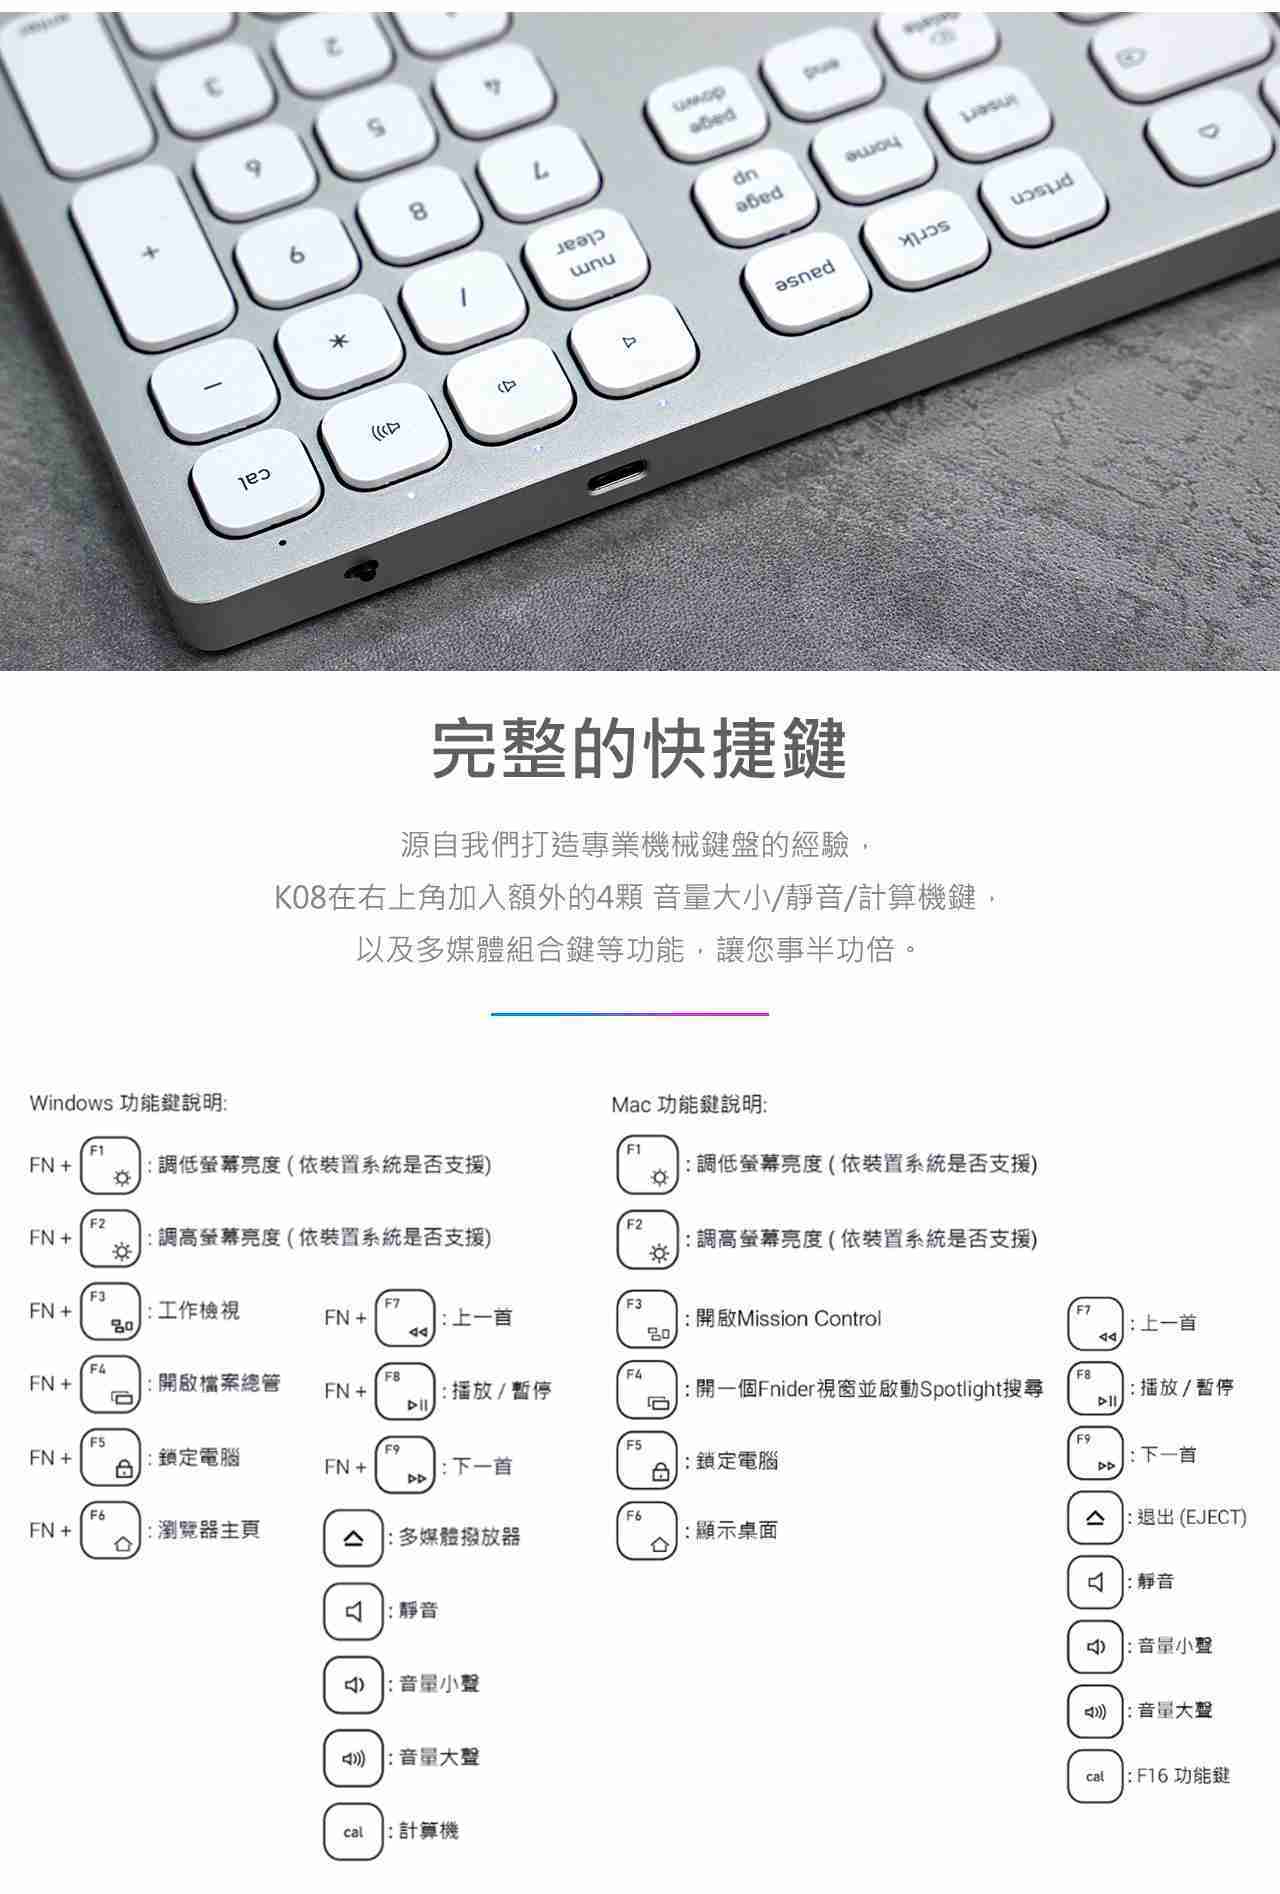 i-Rocks K08R 艾芮克 (Win&Mac雙系統專用)  2.4GHz 無線&藍牙雙模剪刀腳鍵盤 [富廉網]